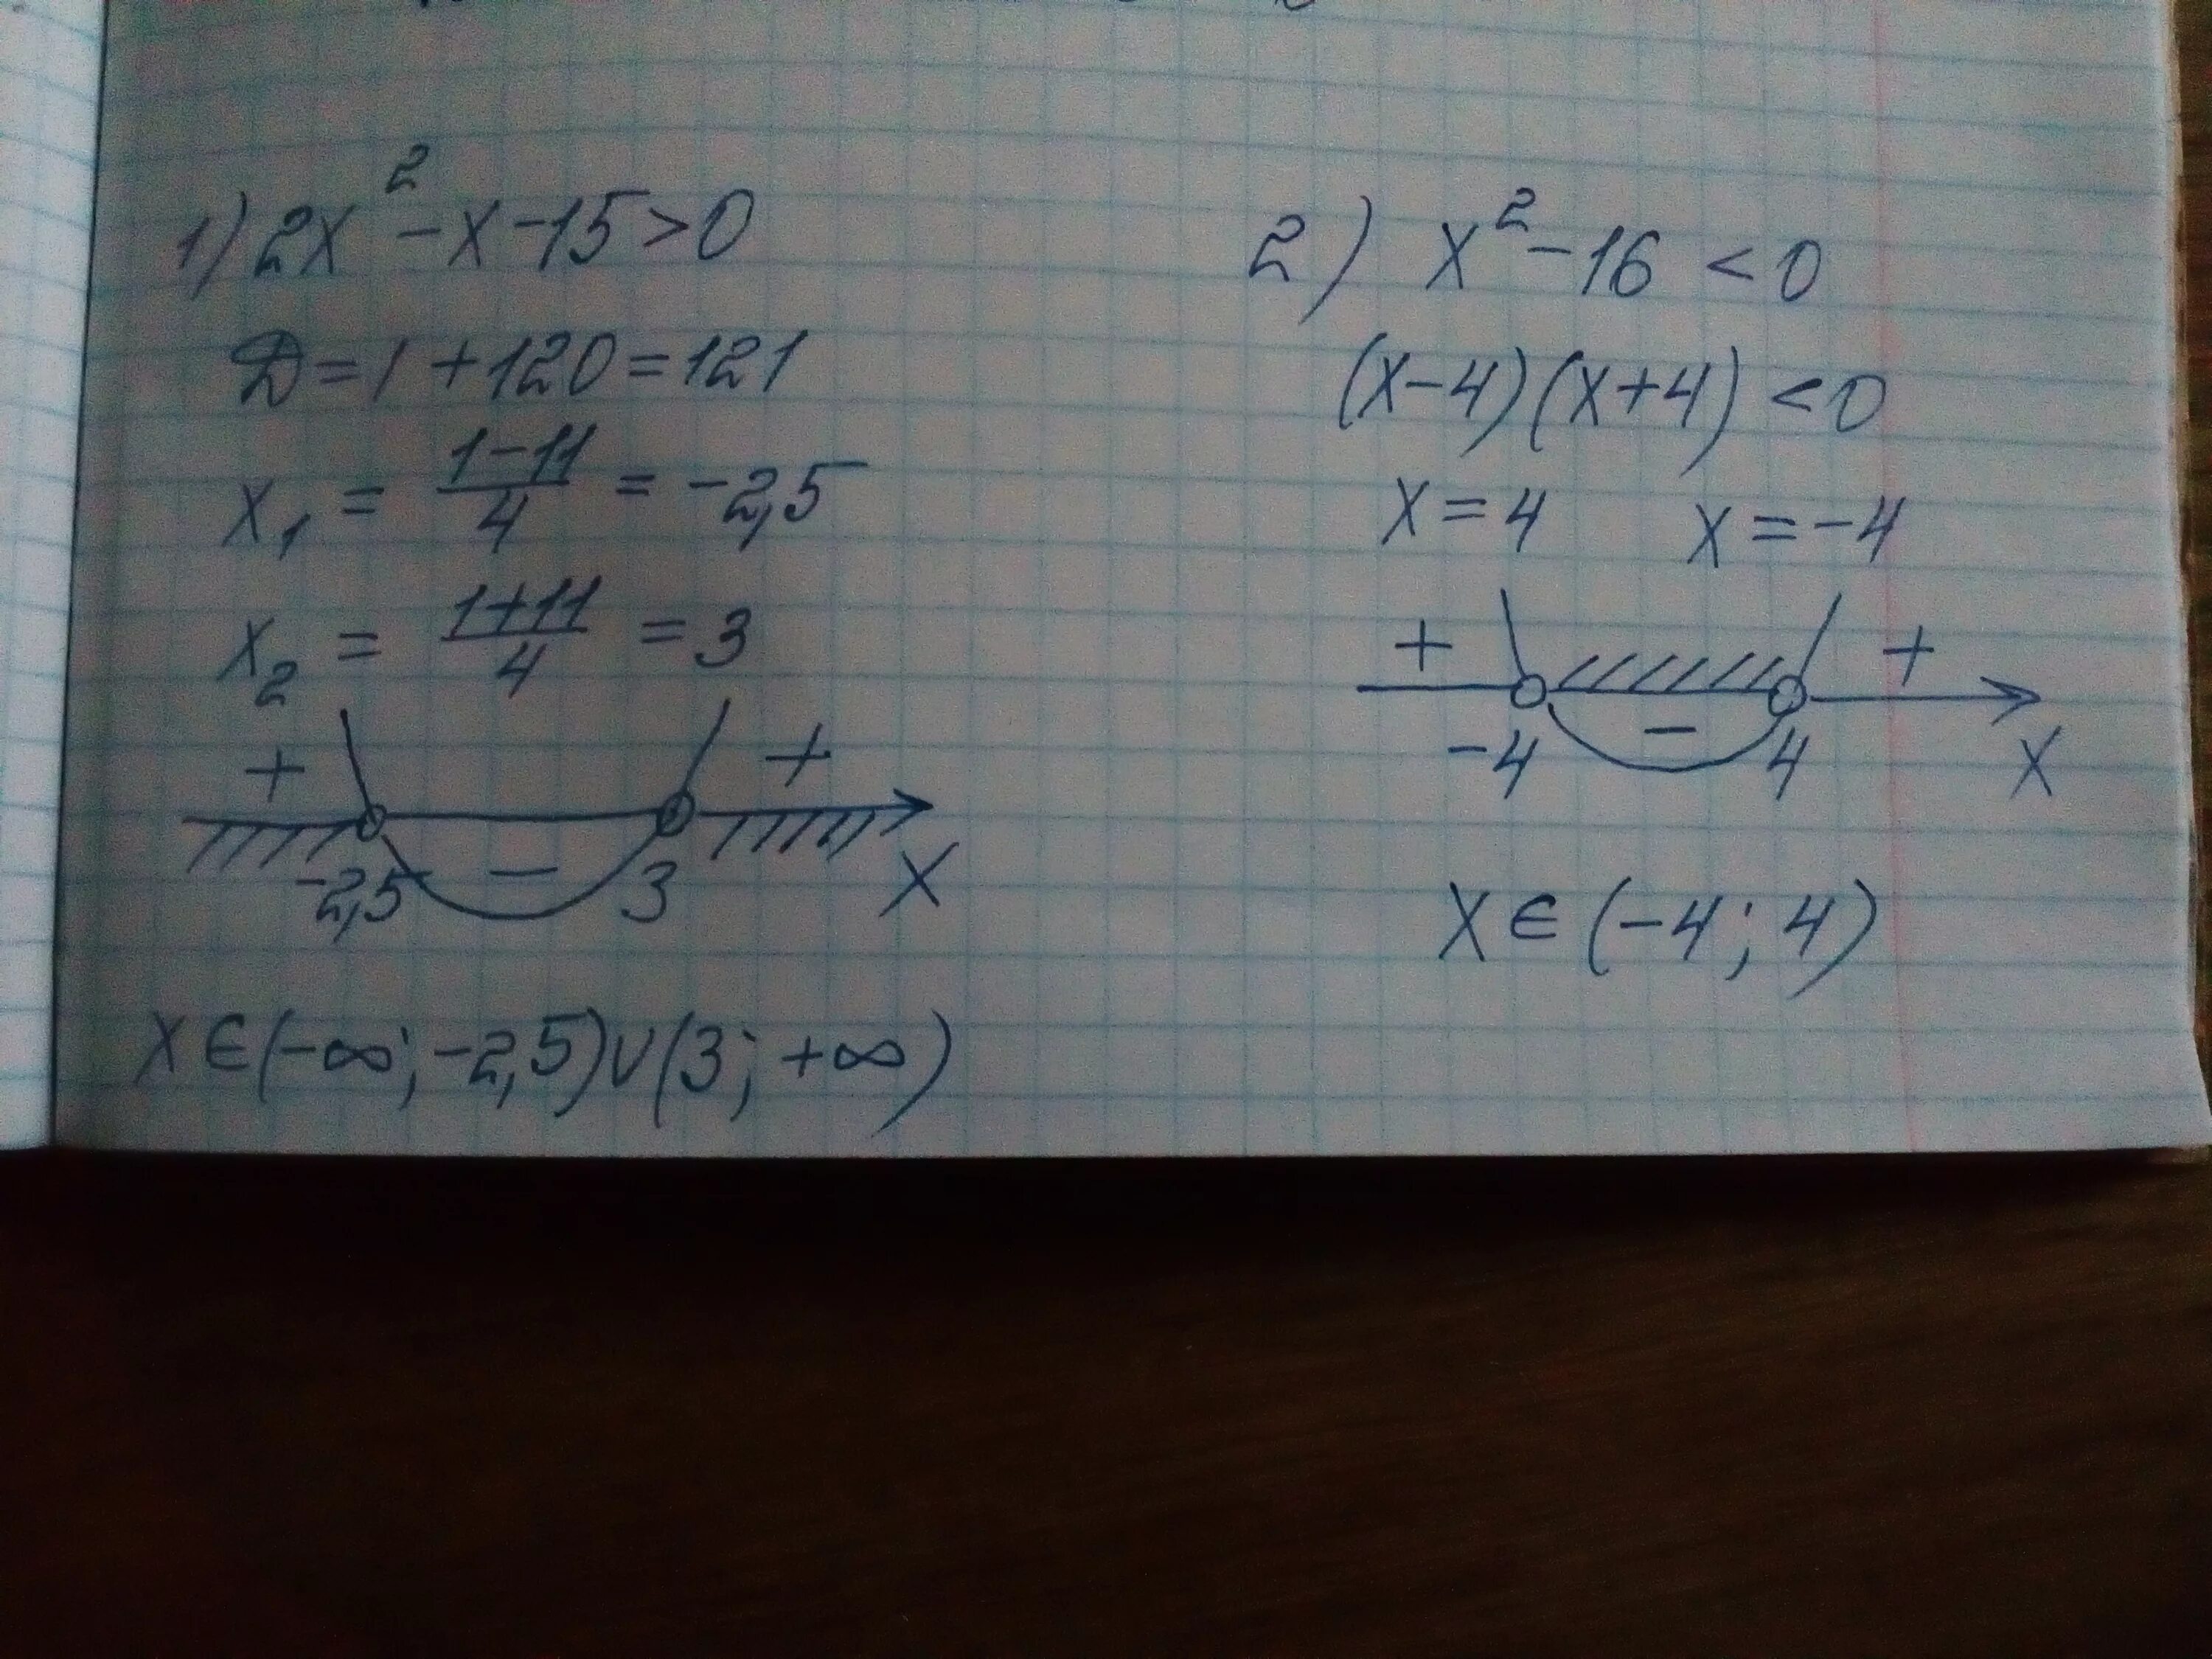 X2 16 0 x 8 0. X2-15=2x. X2-2x-15=0. X X + = 2 15.. X2+15x>0.